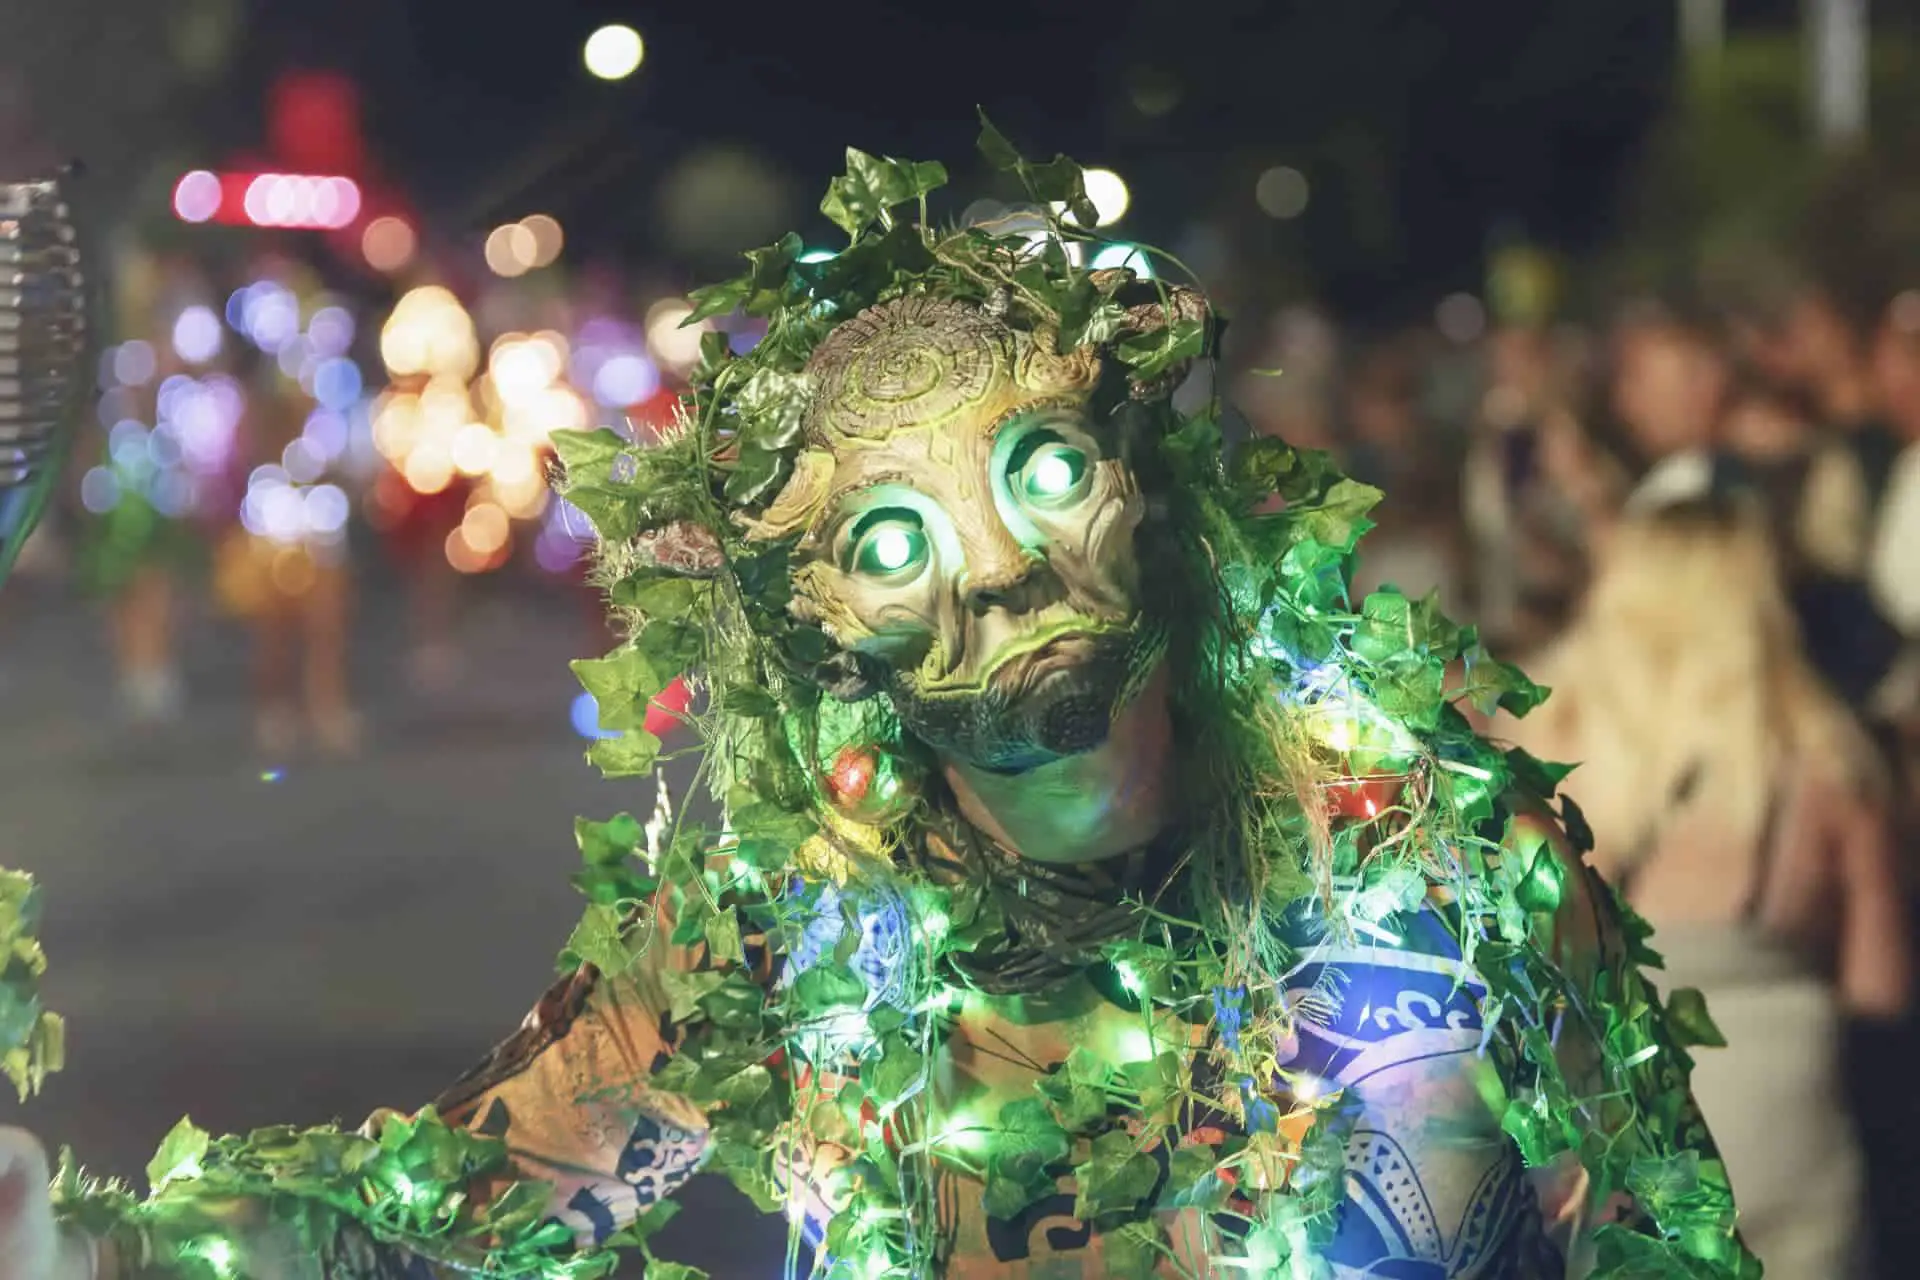 Ryde illuminated carnival